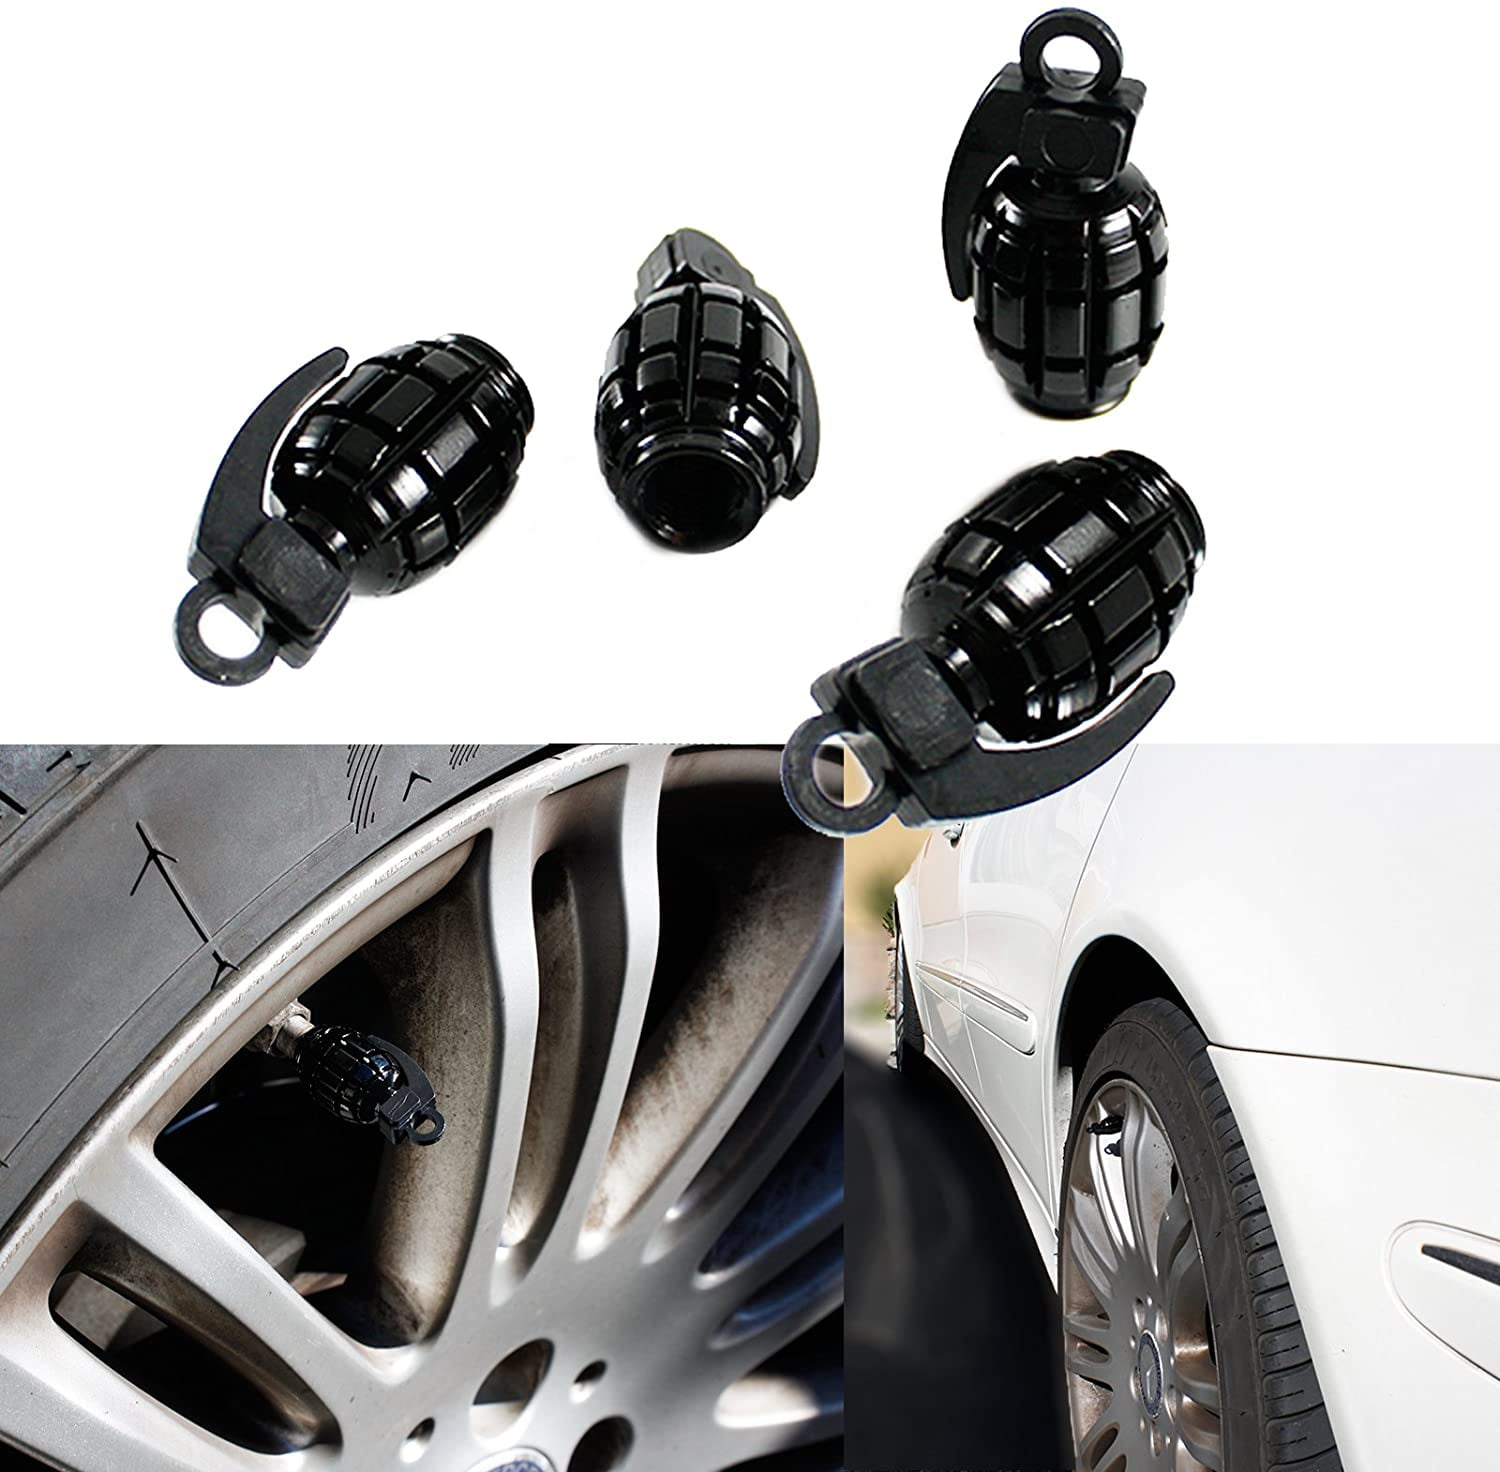 Black LIOOBO 5pcs Car Tire Stem Valve Caps Grenade Shape Metal Car Tire Air Valve Caps Dust Stems Cover for Cars Bike Motorcycle